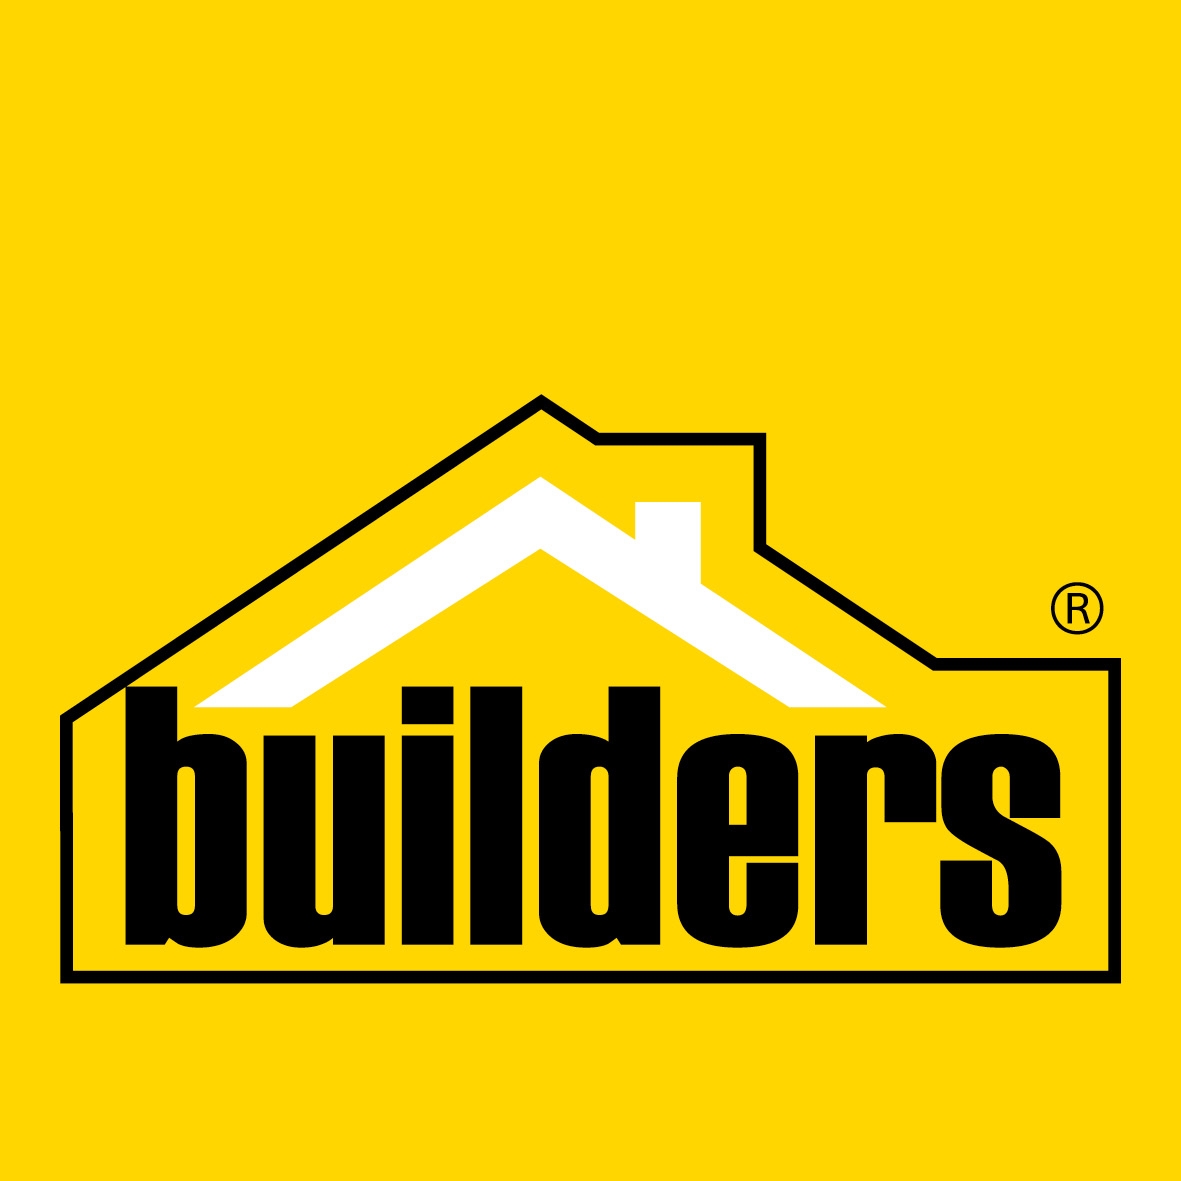 Builders Warehouse logo